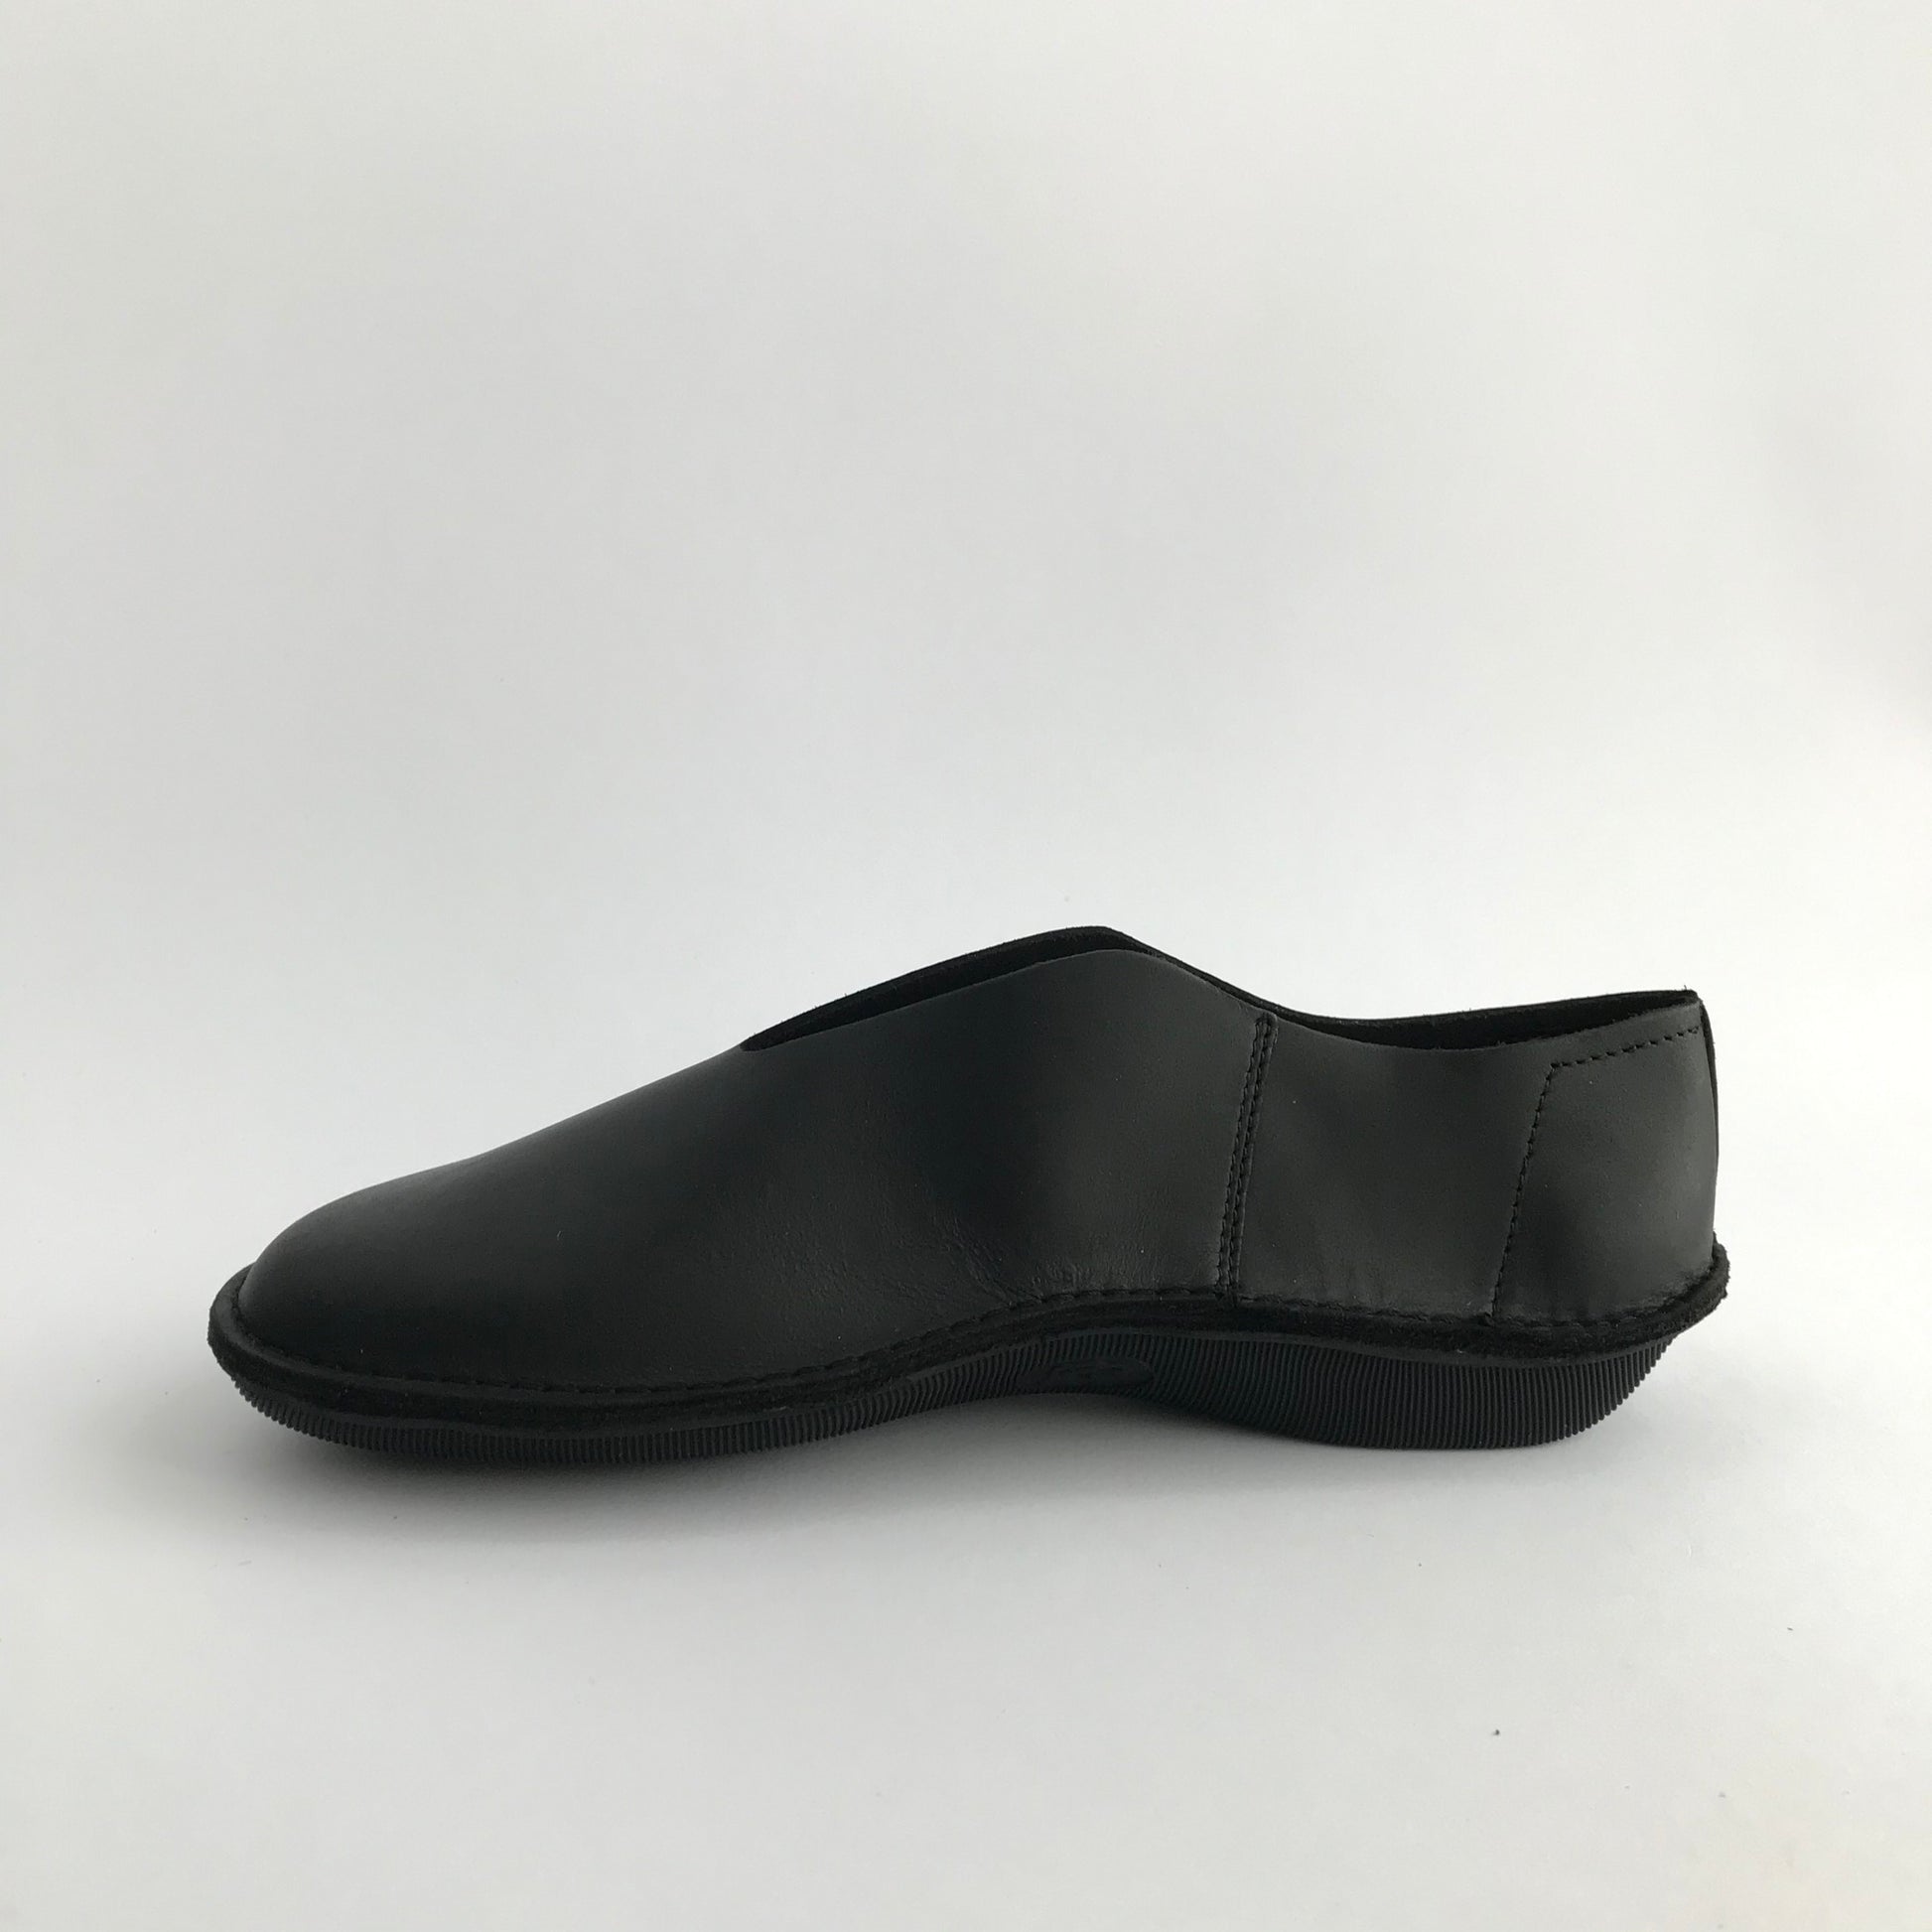 Loints Turbo Black - Imeldas Shoes Norwich